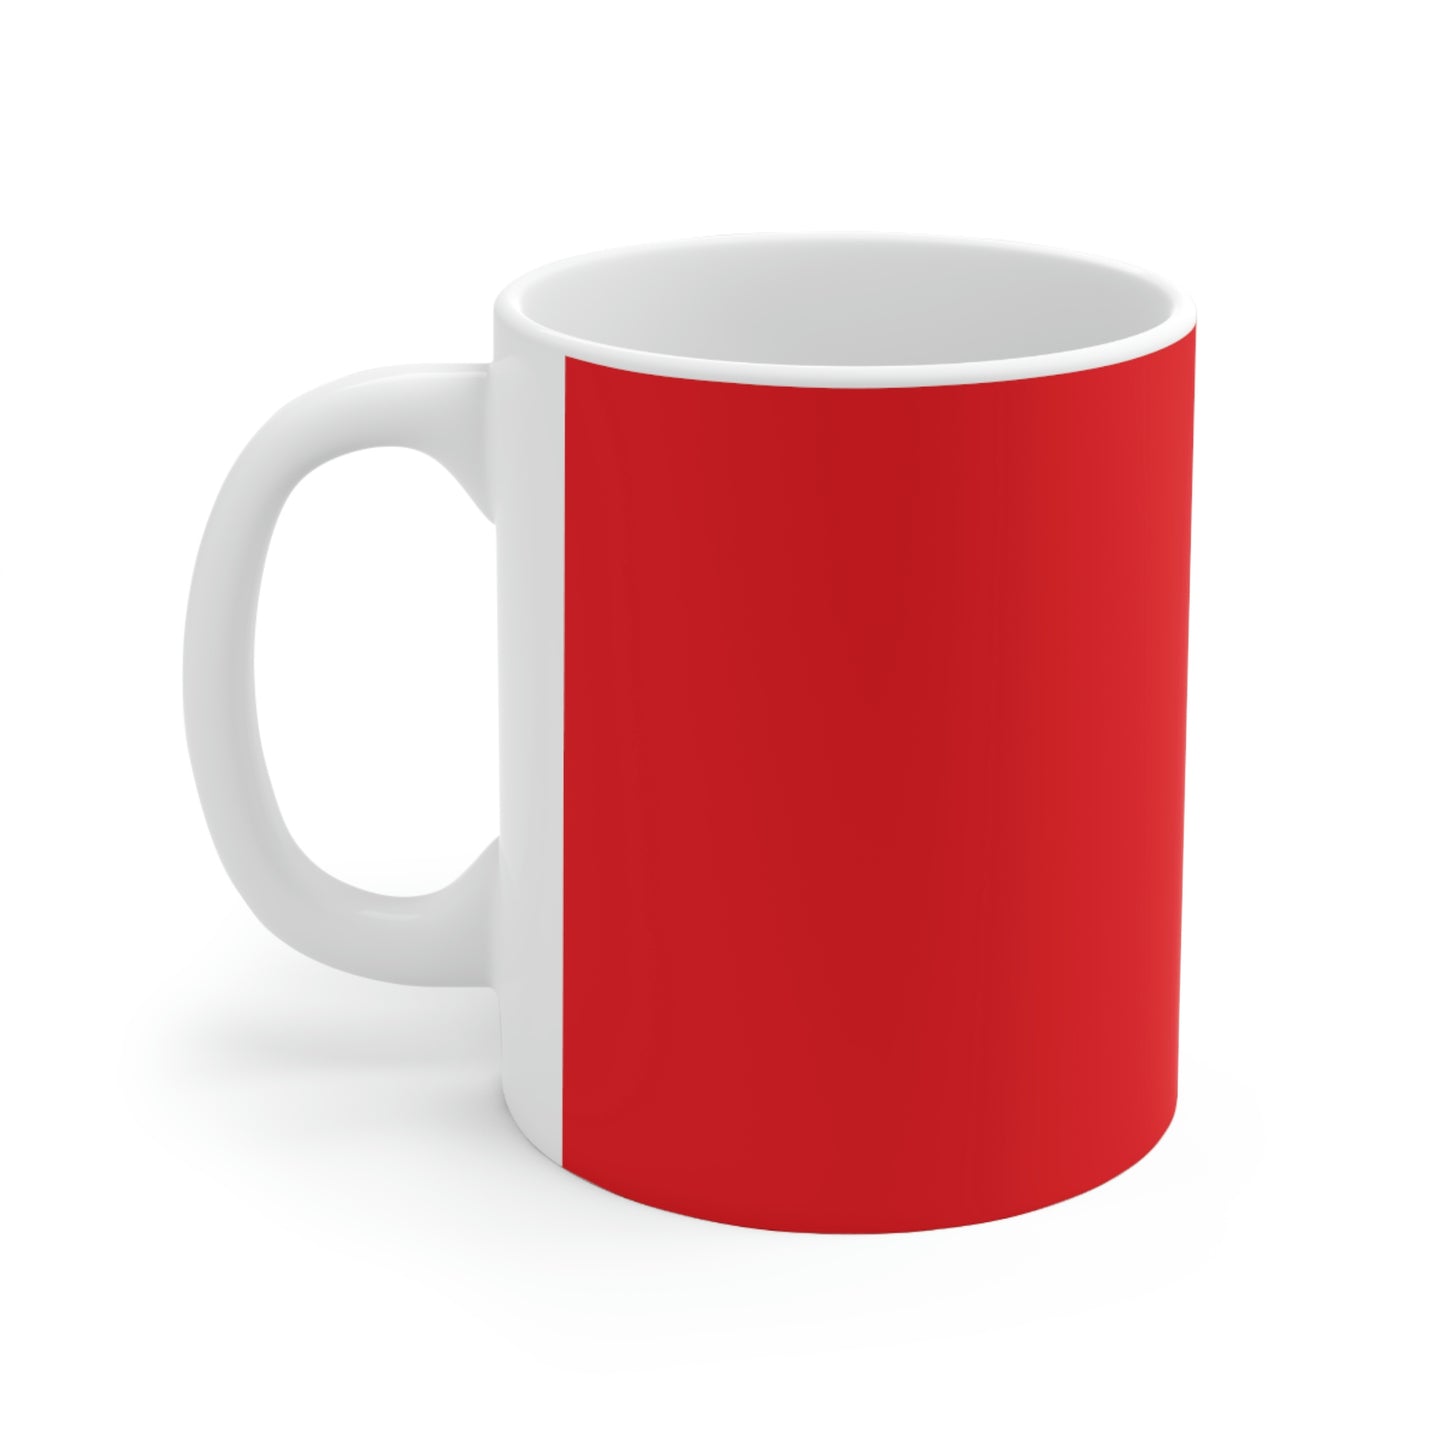 Goblin Ceramic Coffee Cup